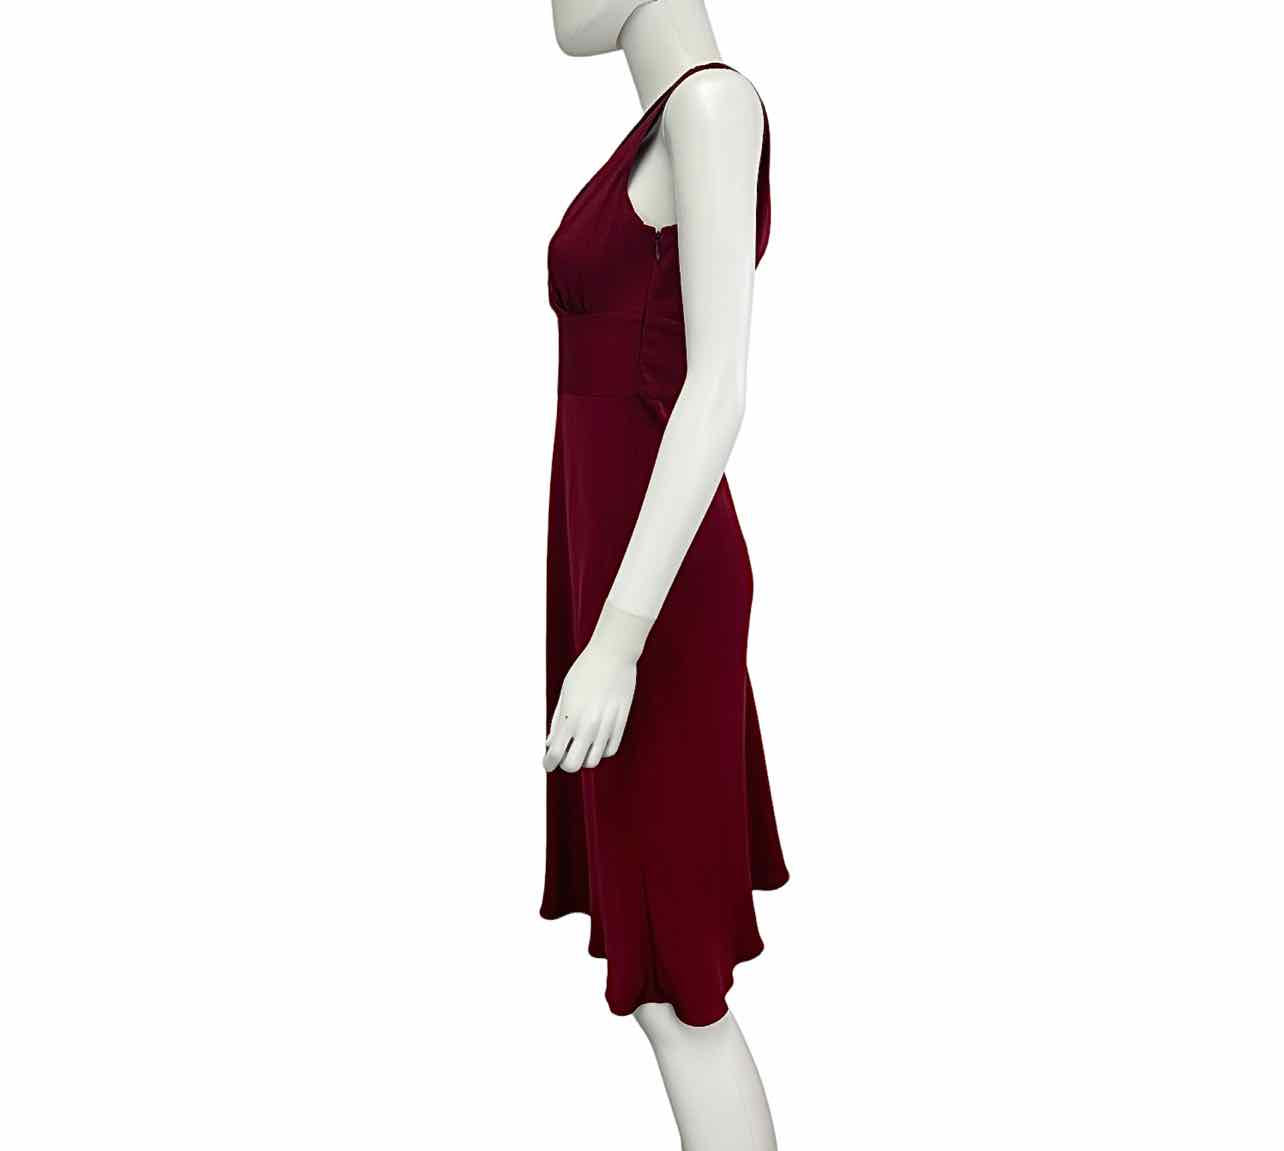 J. Crew Red Silk Sleeveless Dress Size 2P